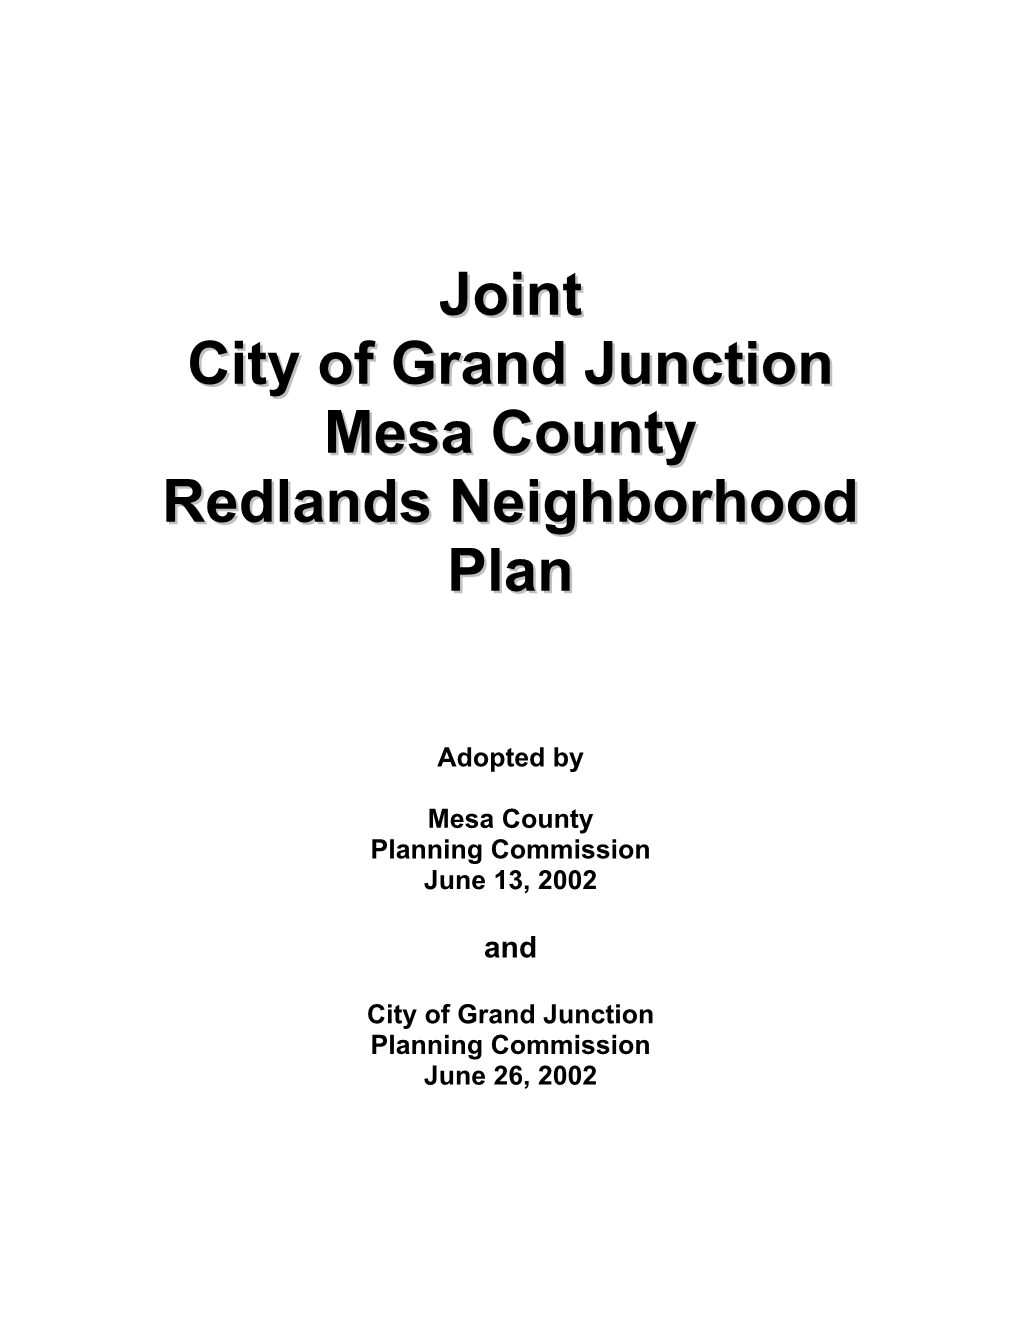 Joint City of Grand Junction Mesa County Redlands Neighborhood Plan